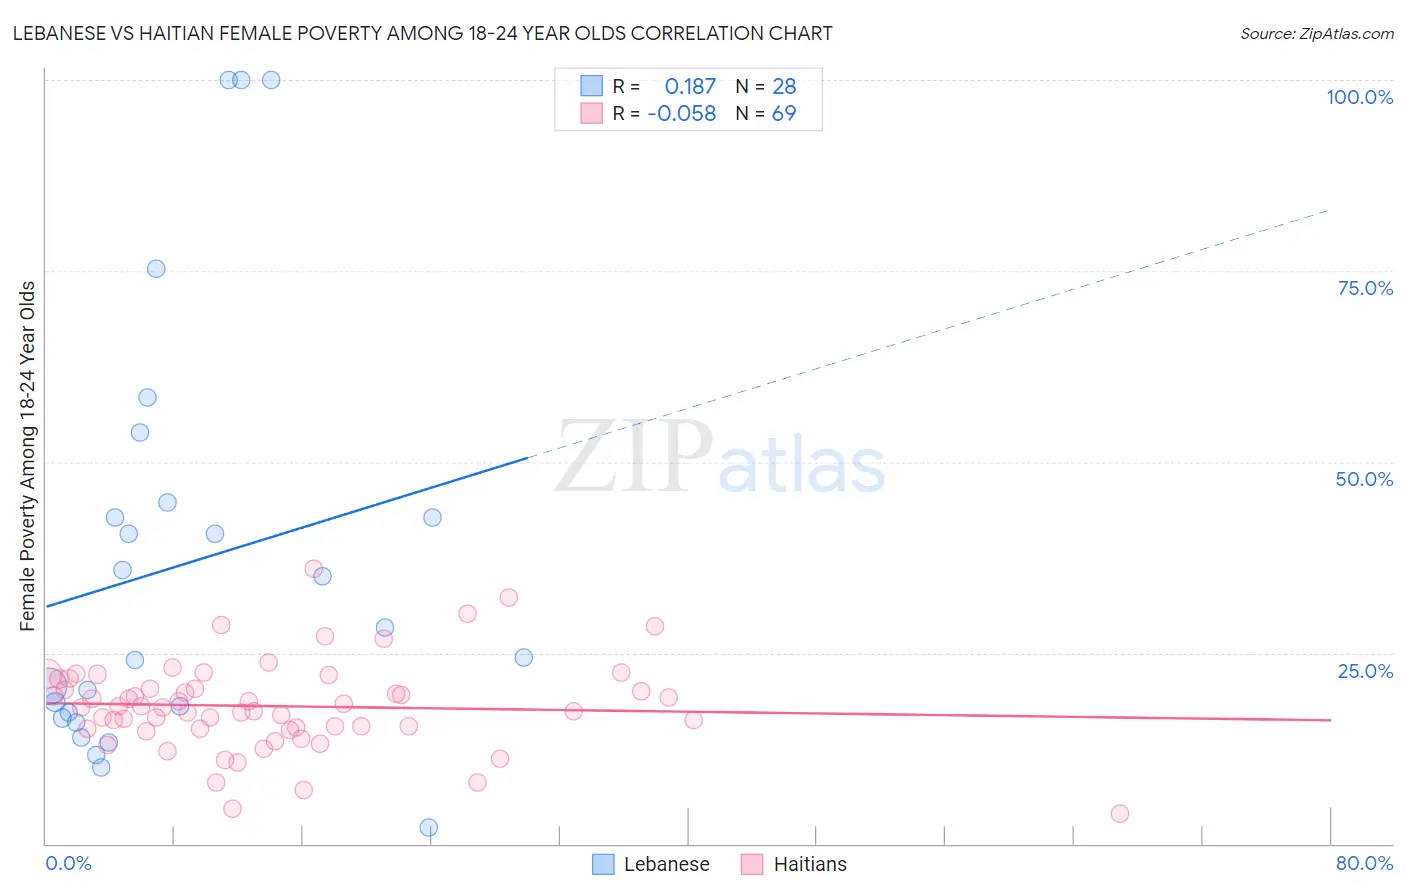 Lebanese vs Haitian Female Poverty Among 18-24 Year Olds